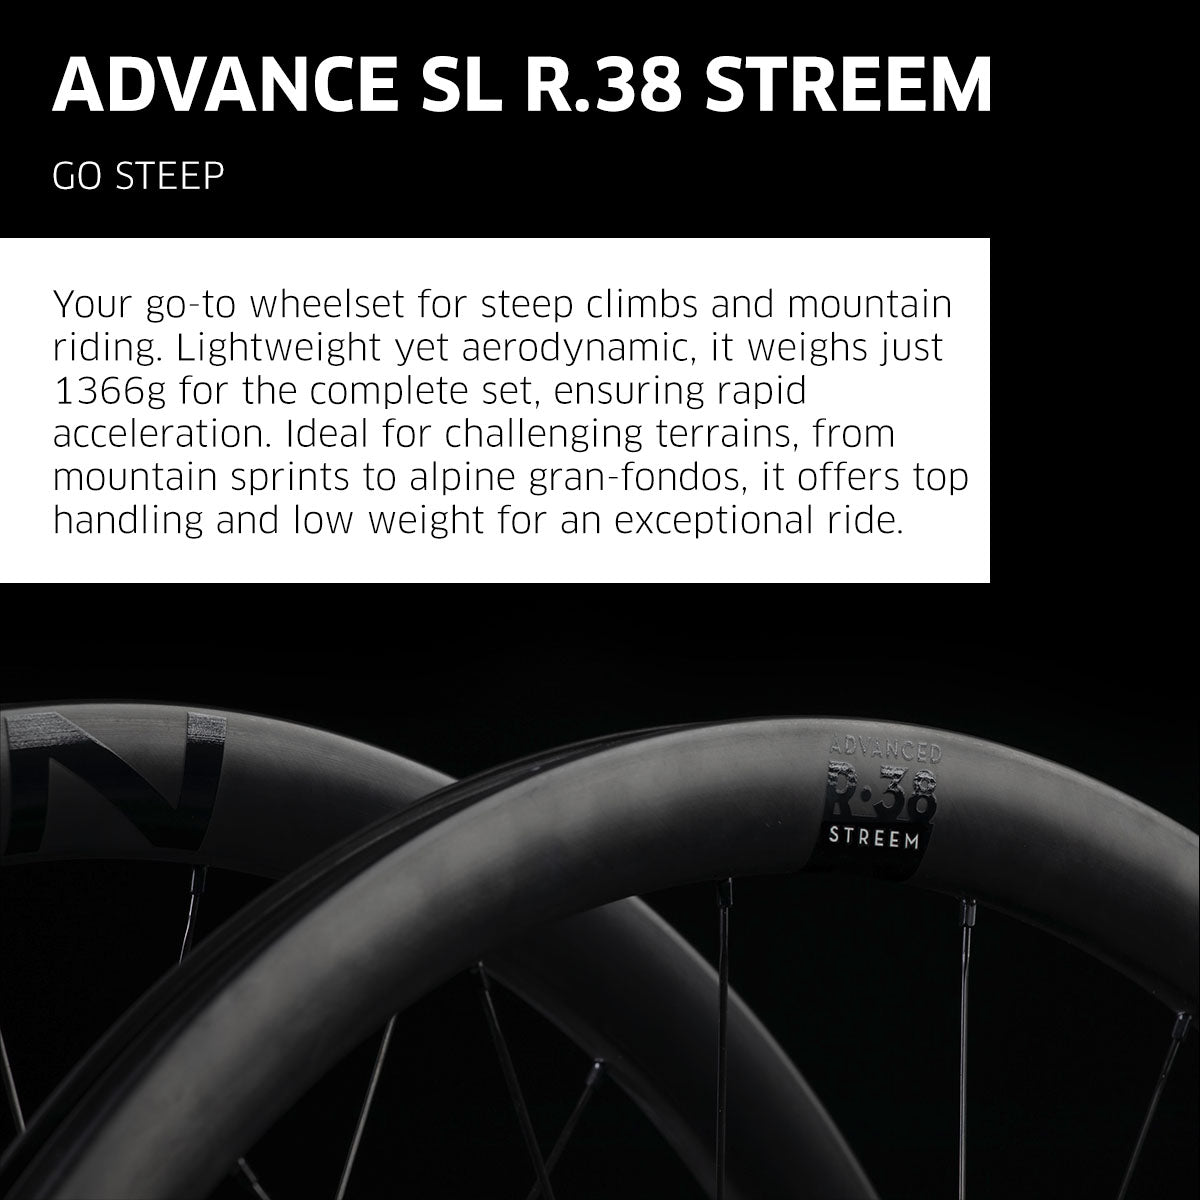 Newmen Wheel - Advanced SL R.38 Streem